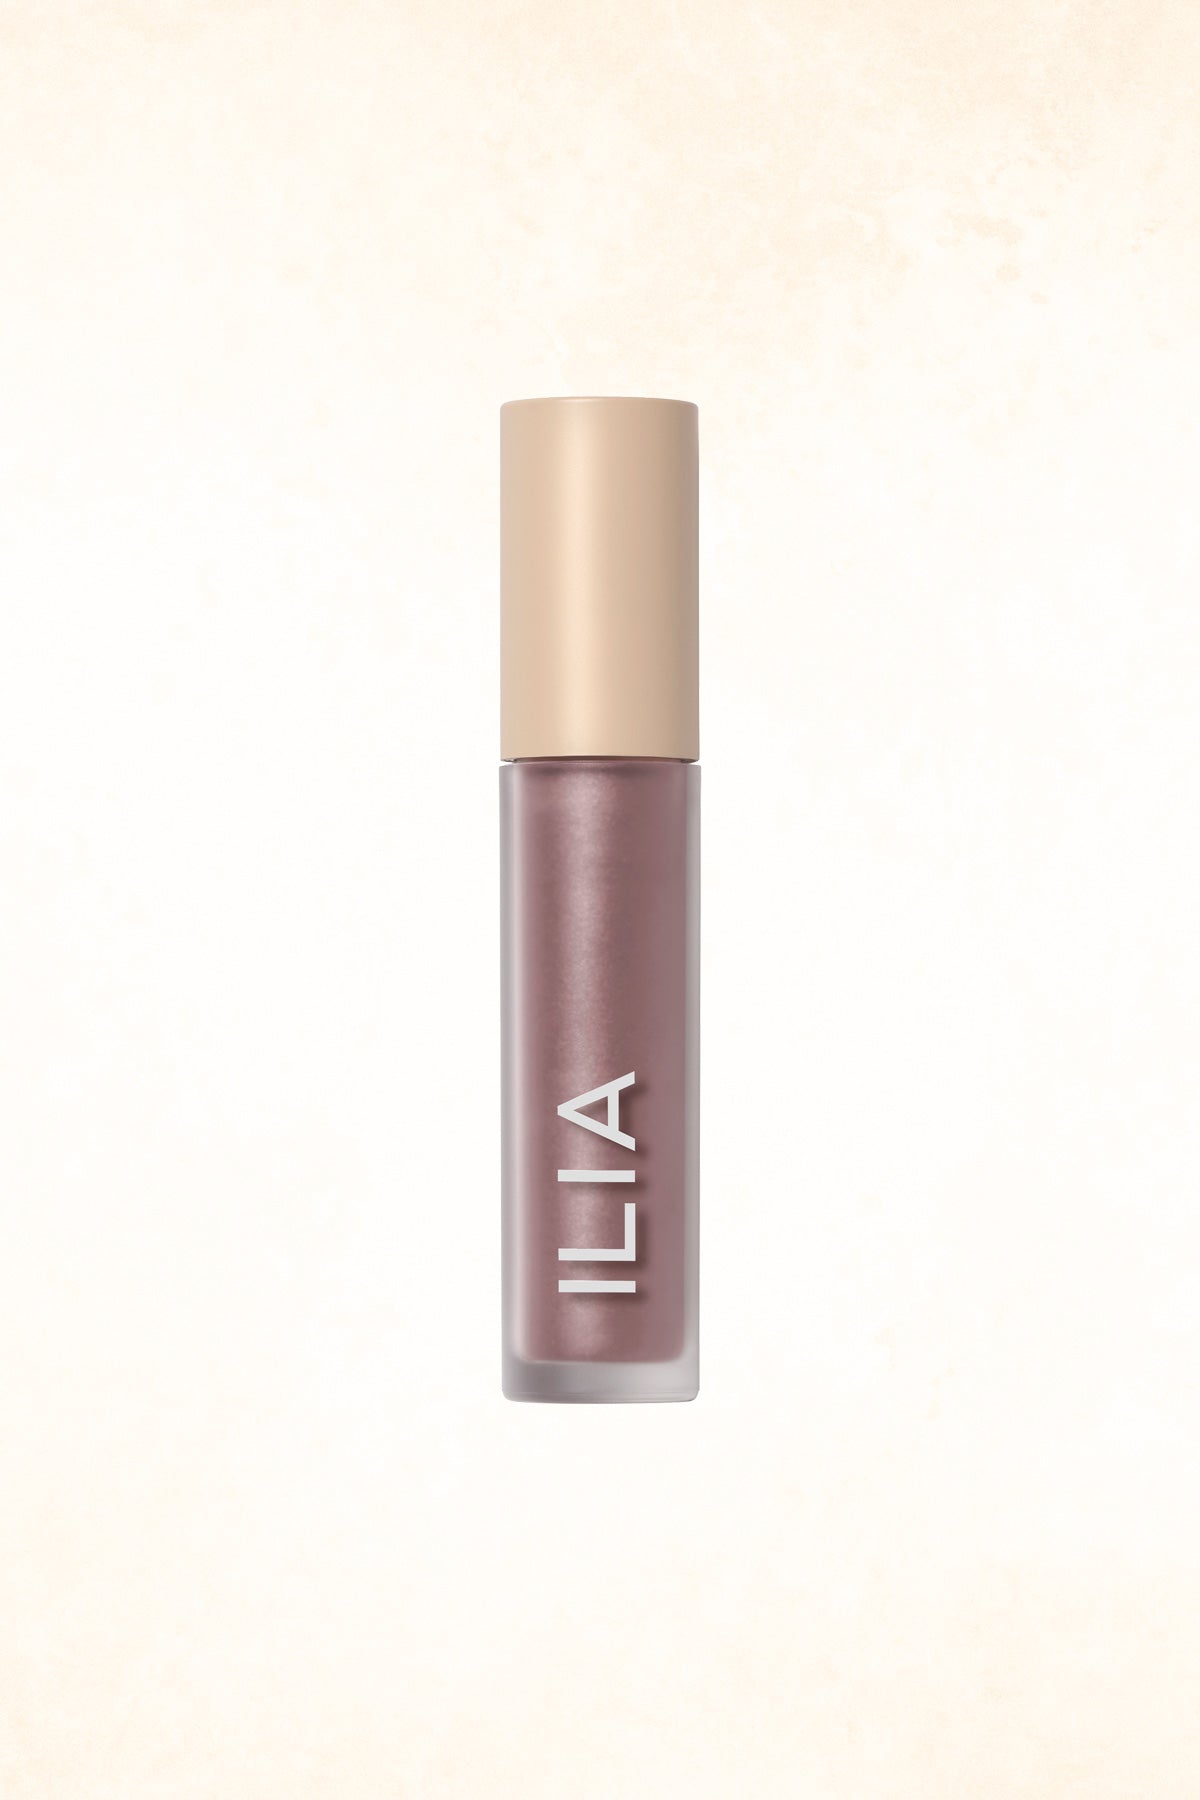 ILIA - Liquid Powder Chromatic Eye Tint - Dim